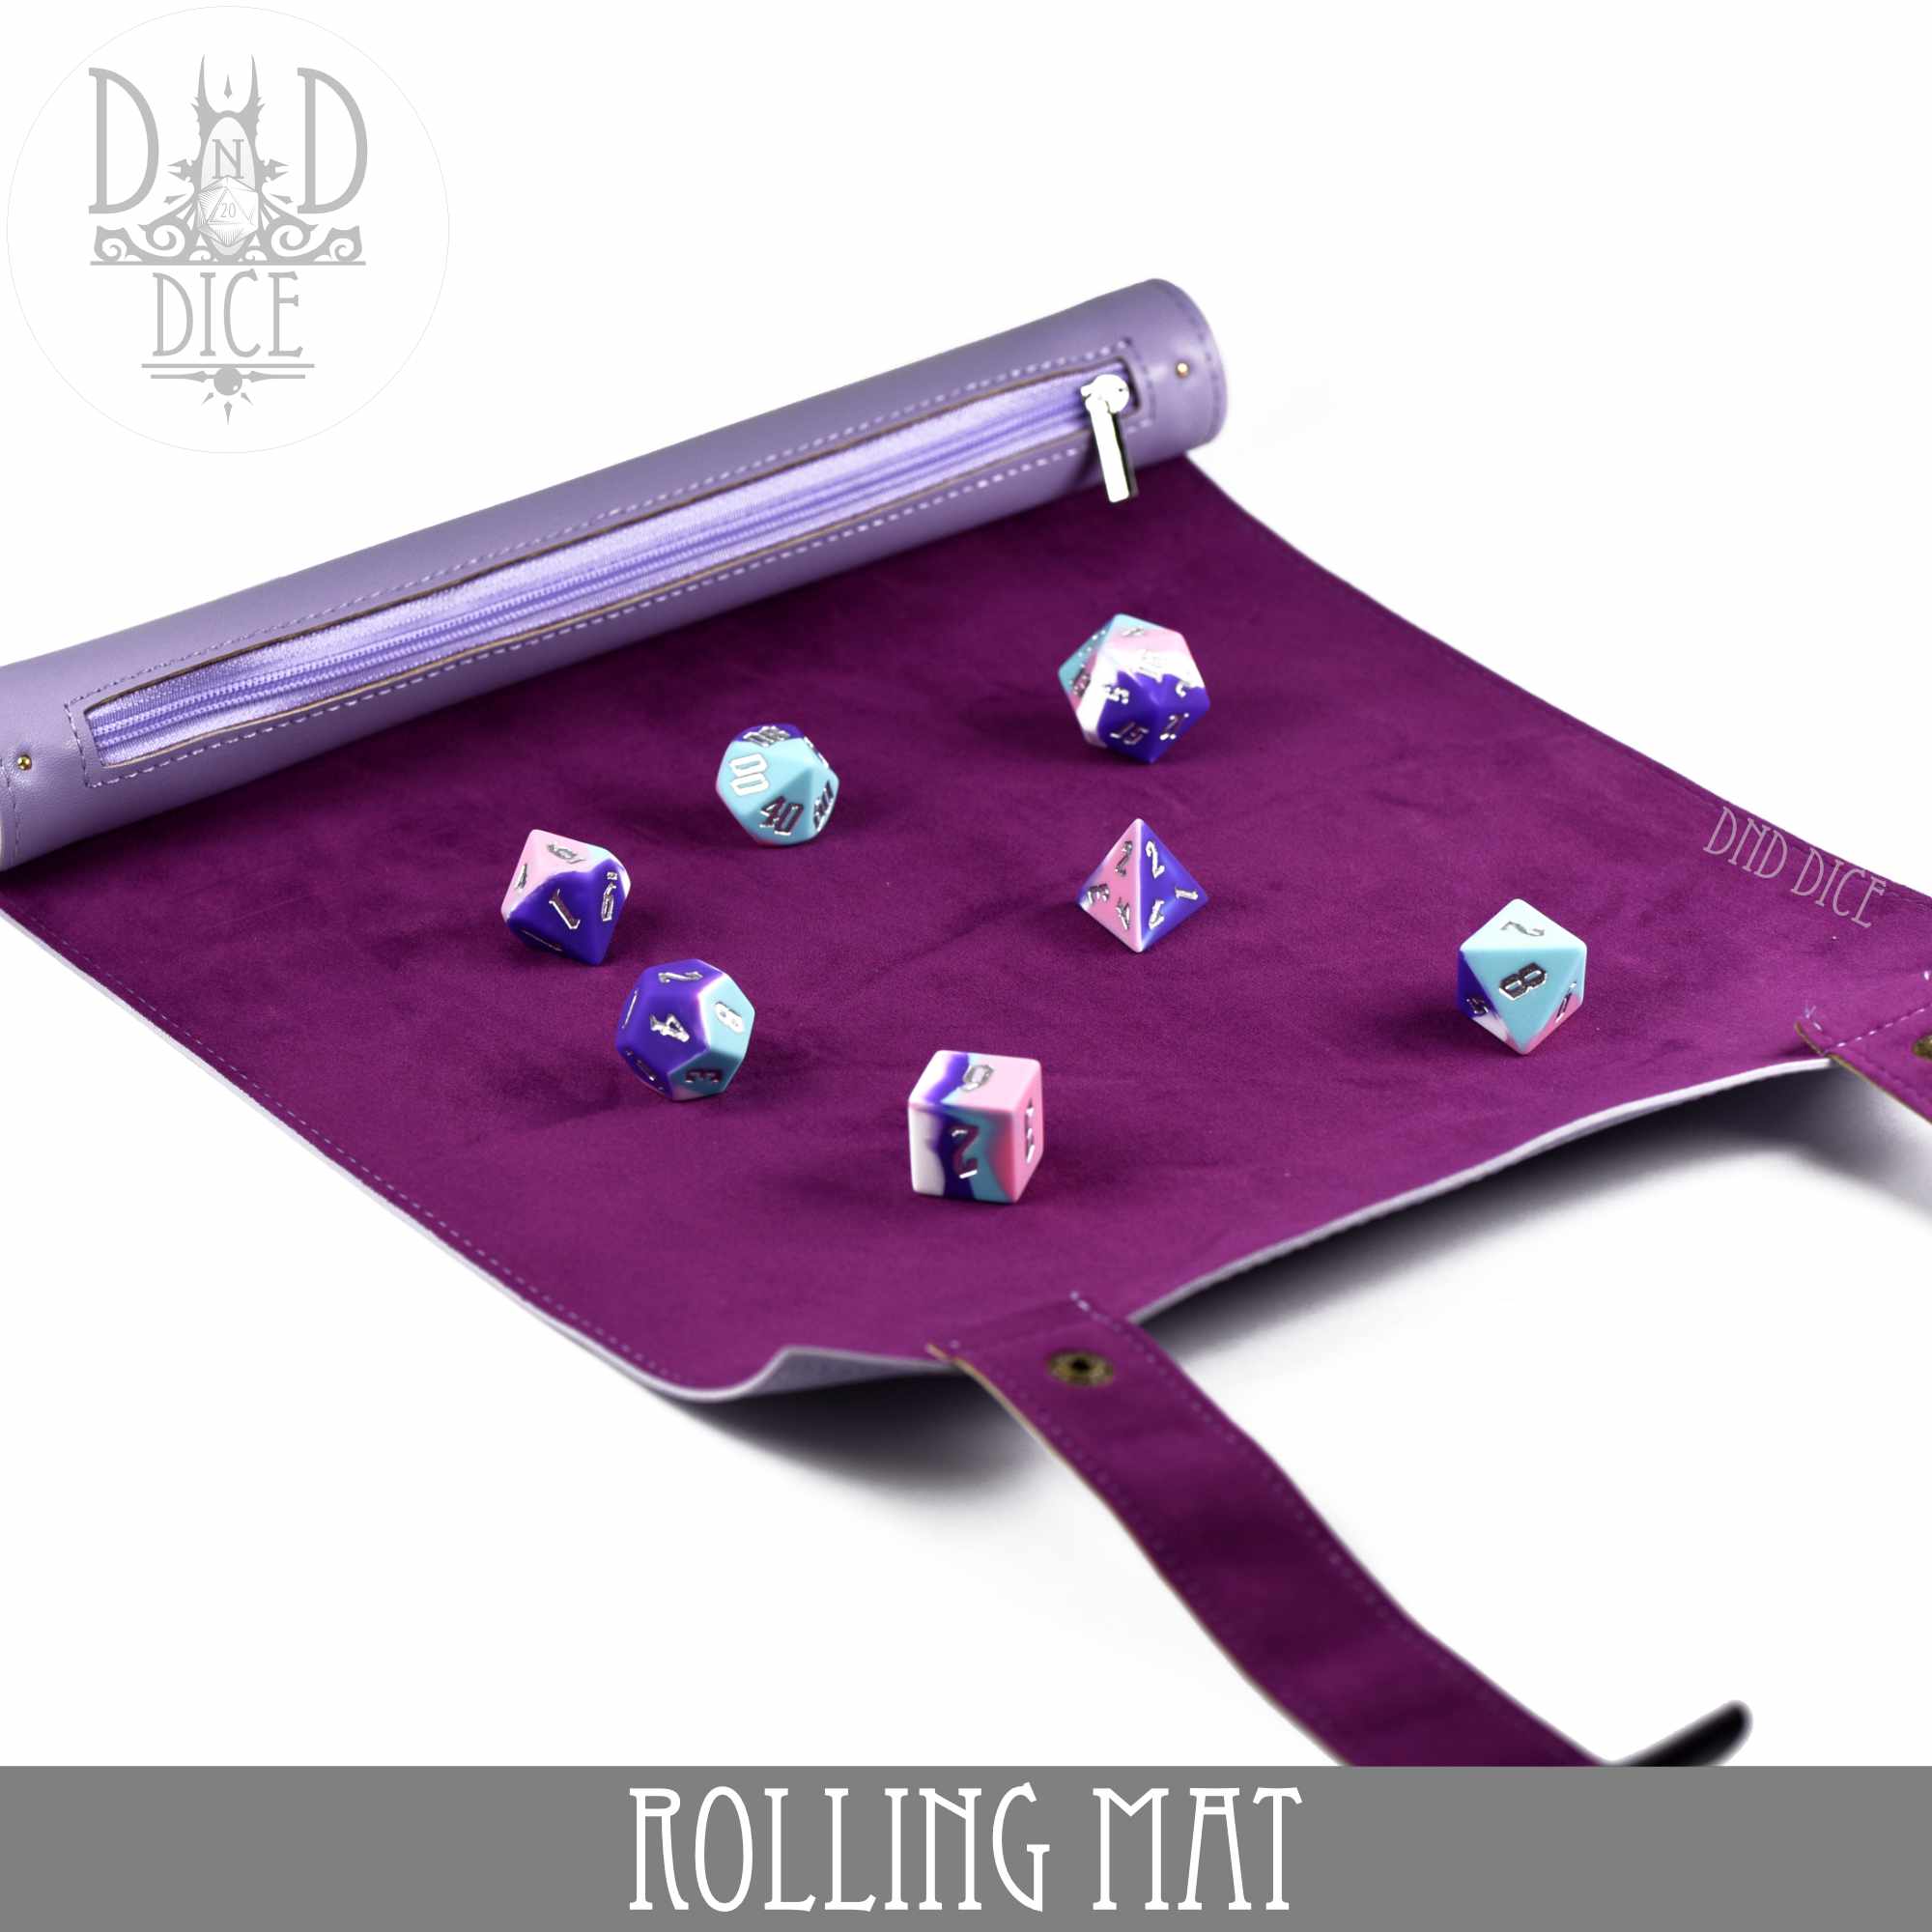 Dice Rolling Mat (3 Colors)